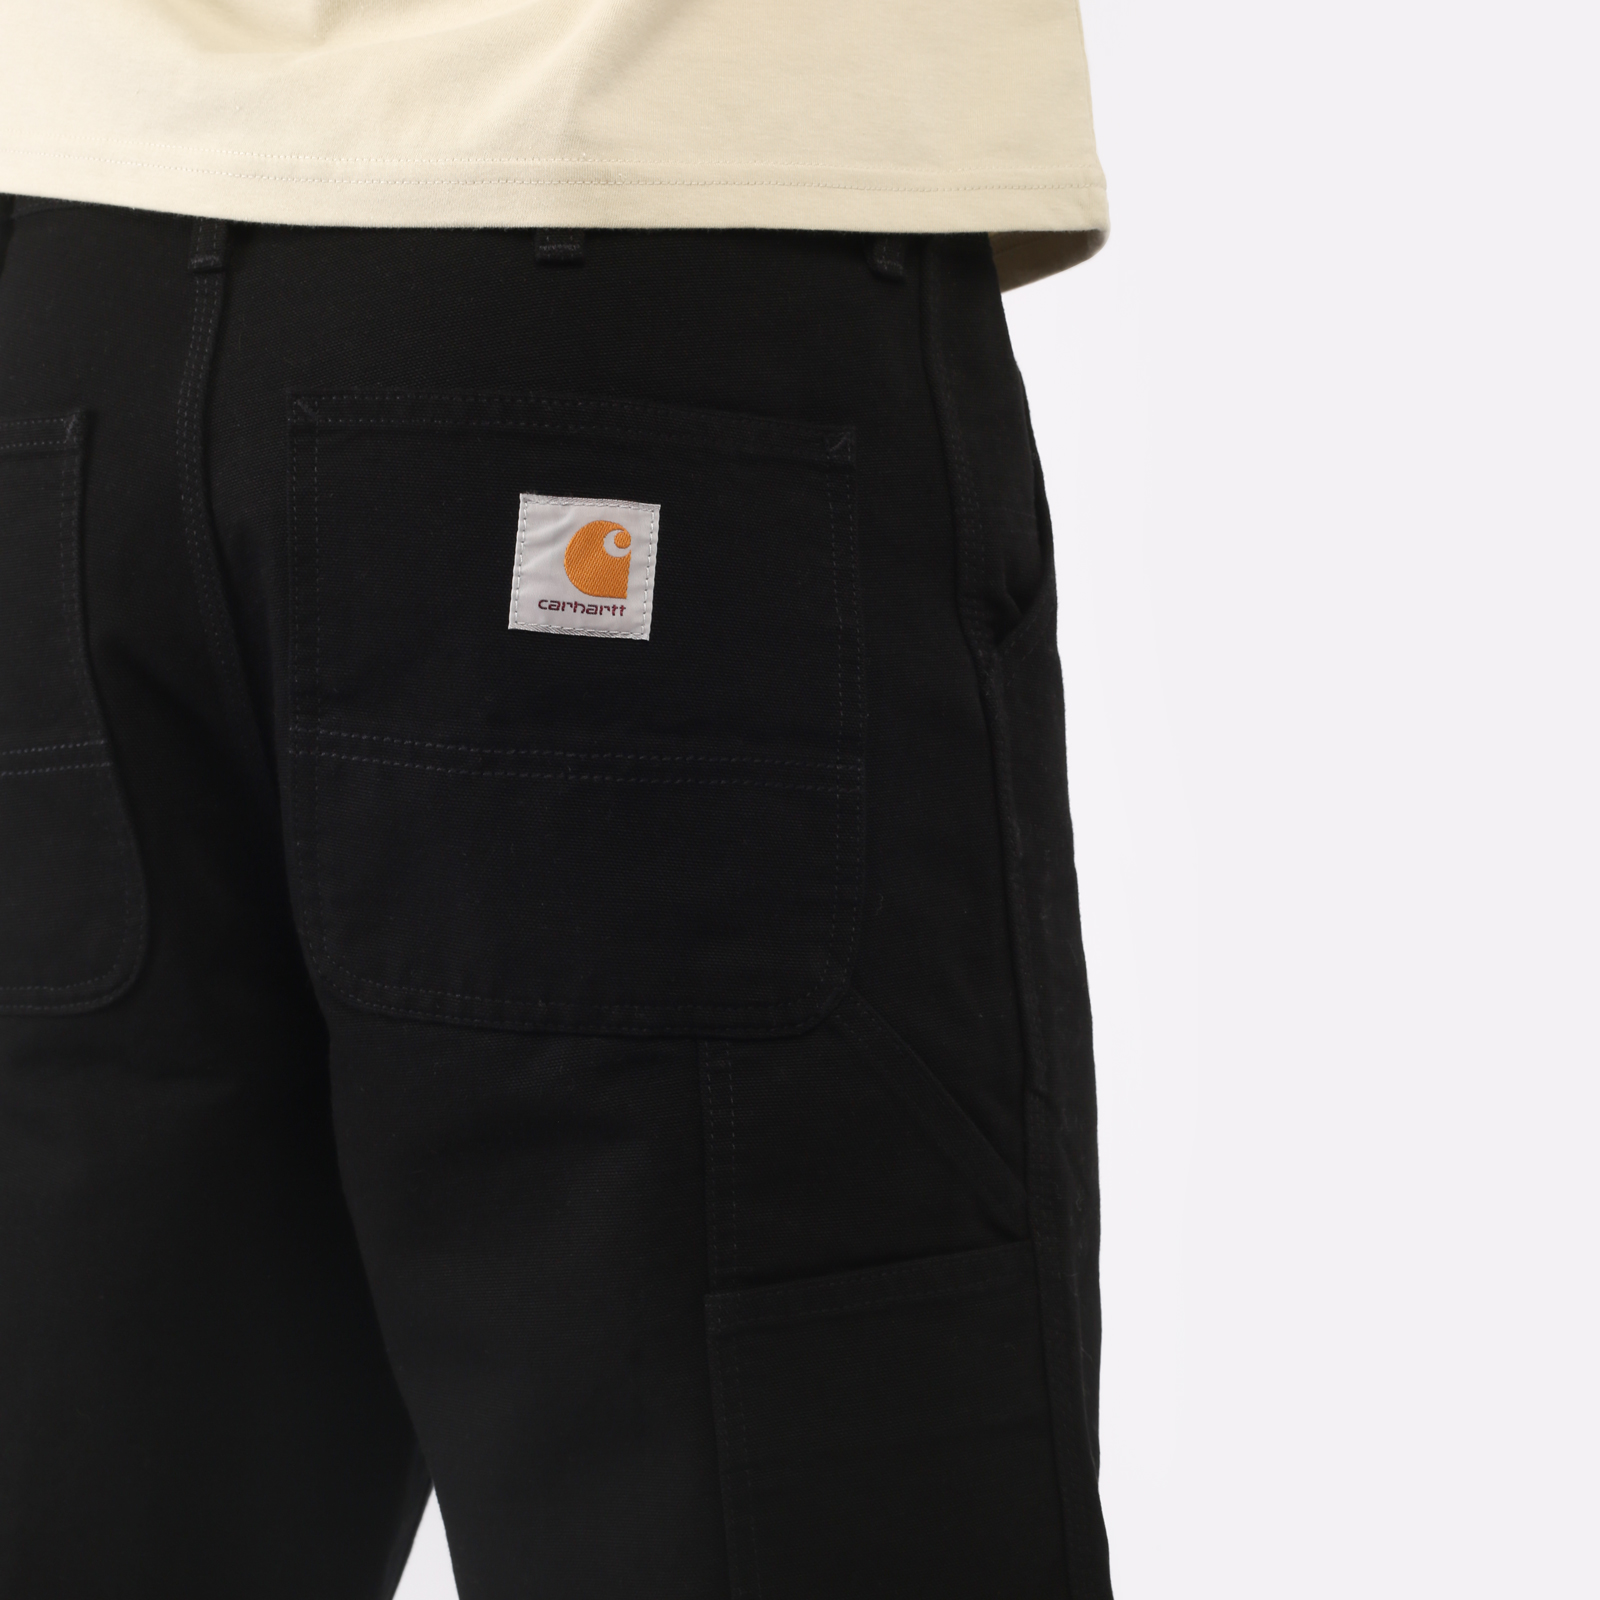 Мужские шорты Carhartt WIP Single Knee Short (I027942-black)  - цена, описание, фото 8